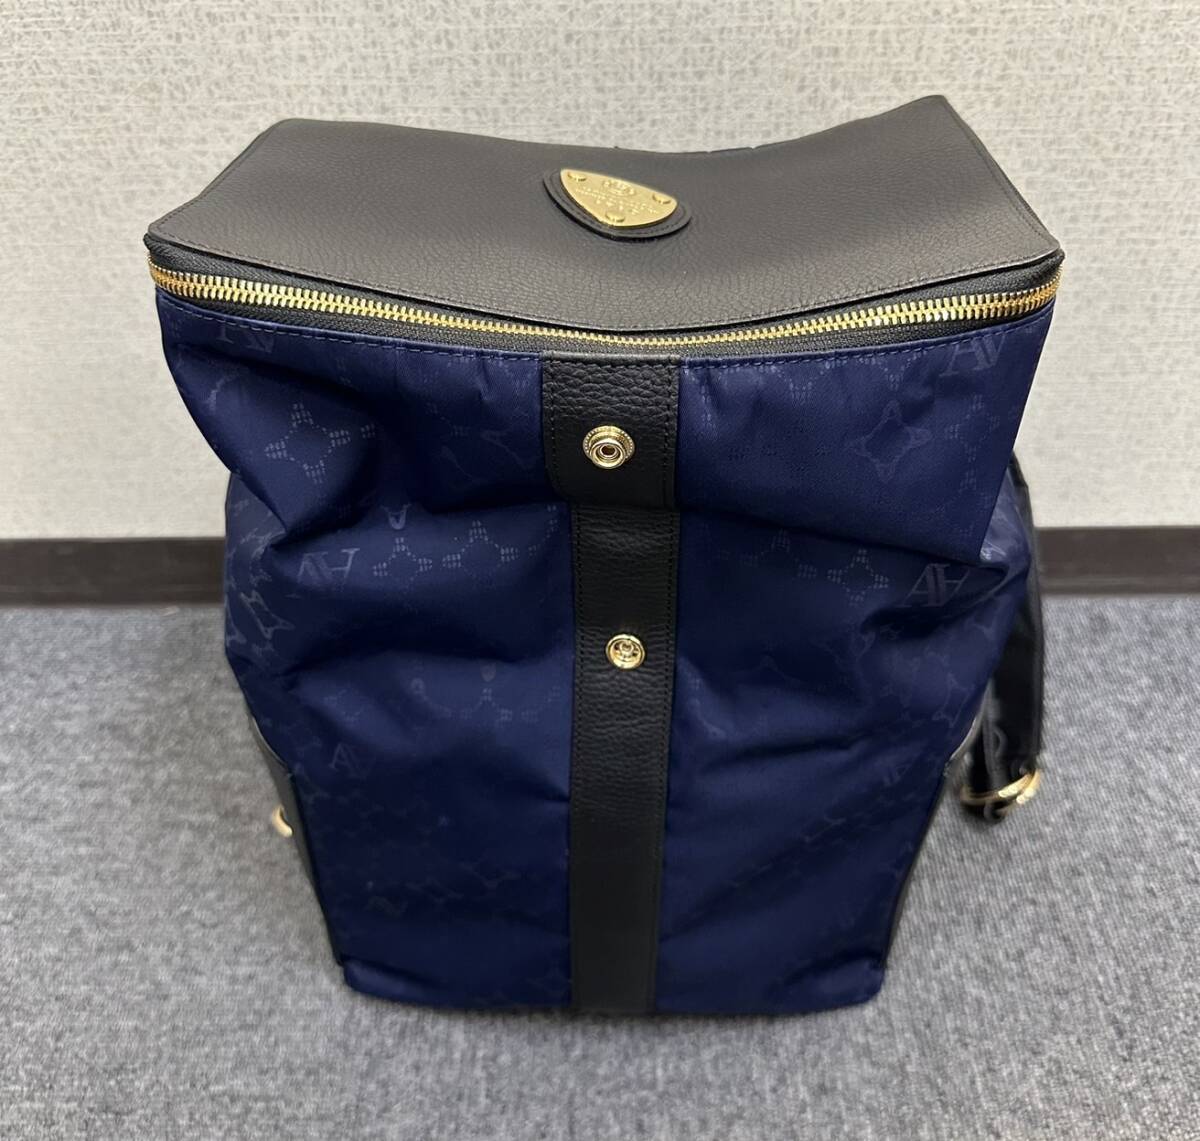 [DK 23837]1 jpy ~ ATAOatao mushroom monogram navy bag rucksack Day Pack storage bag have used present condition goods 